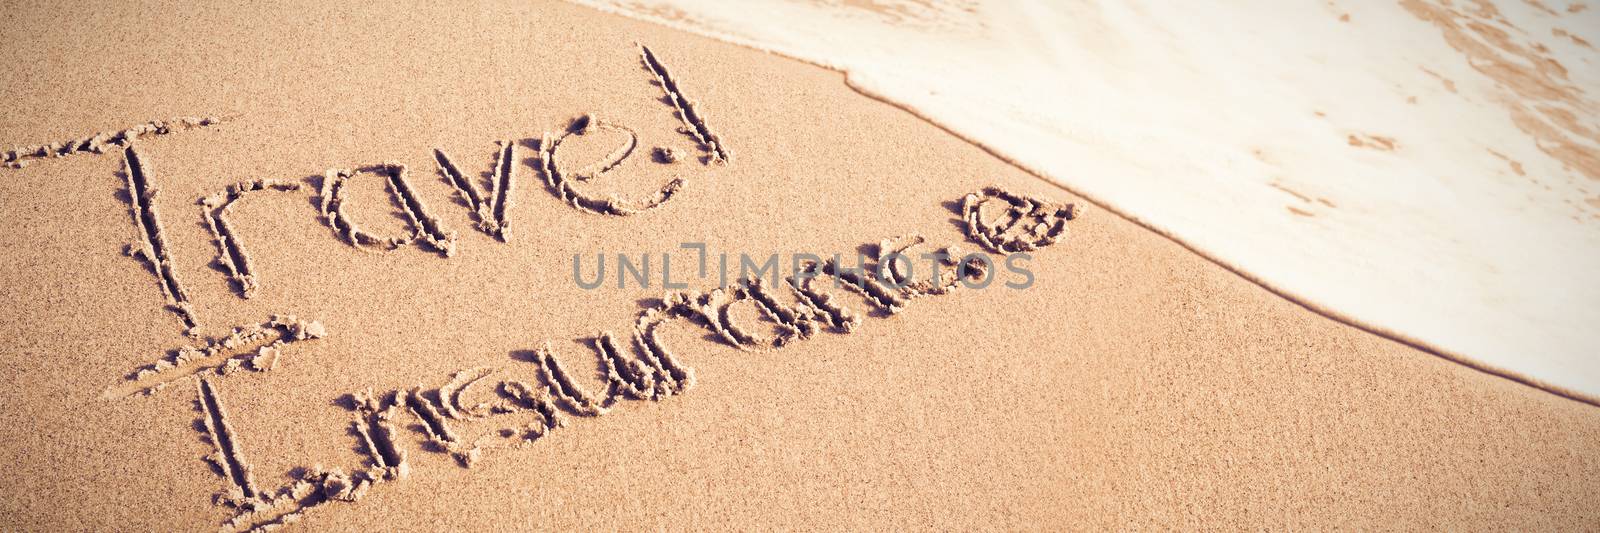 Travel Insurance text written on sand by Wavebreakmedia